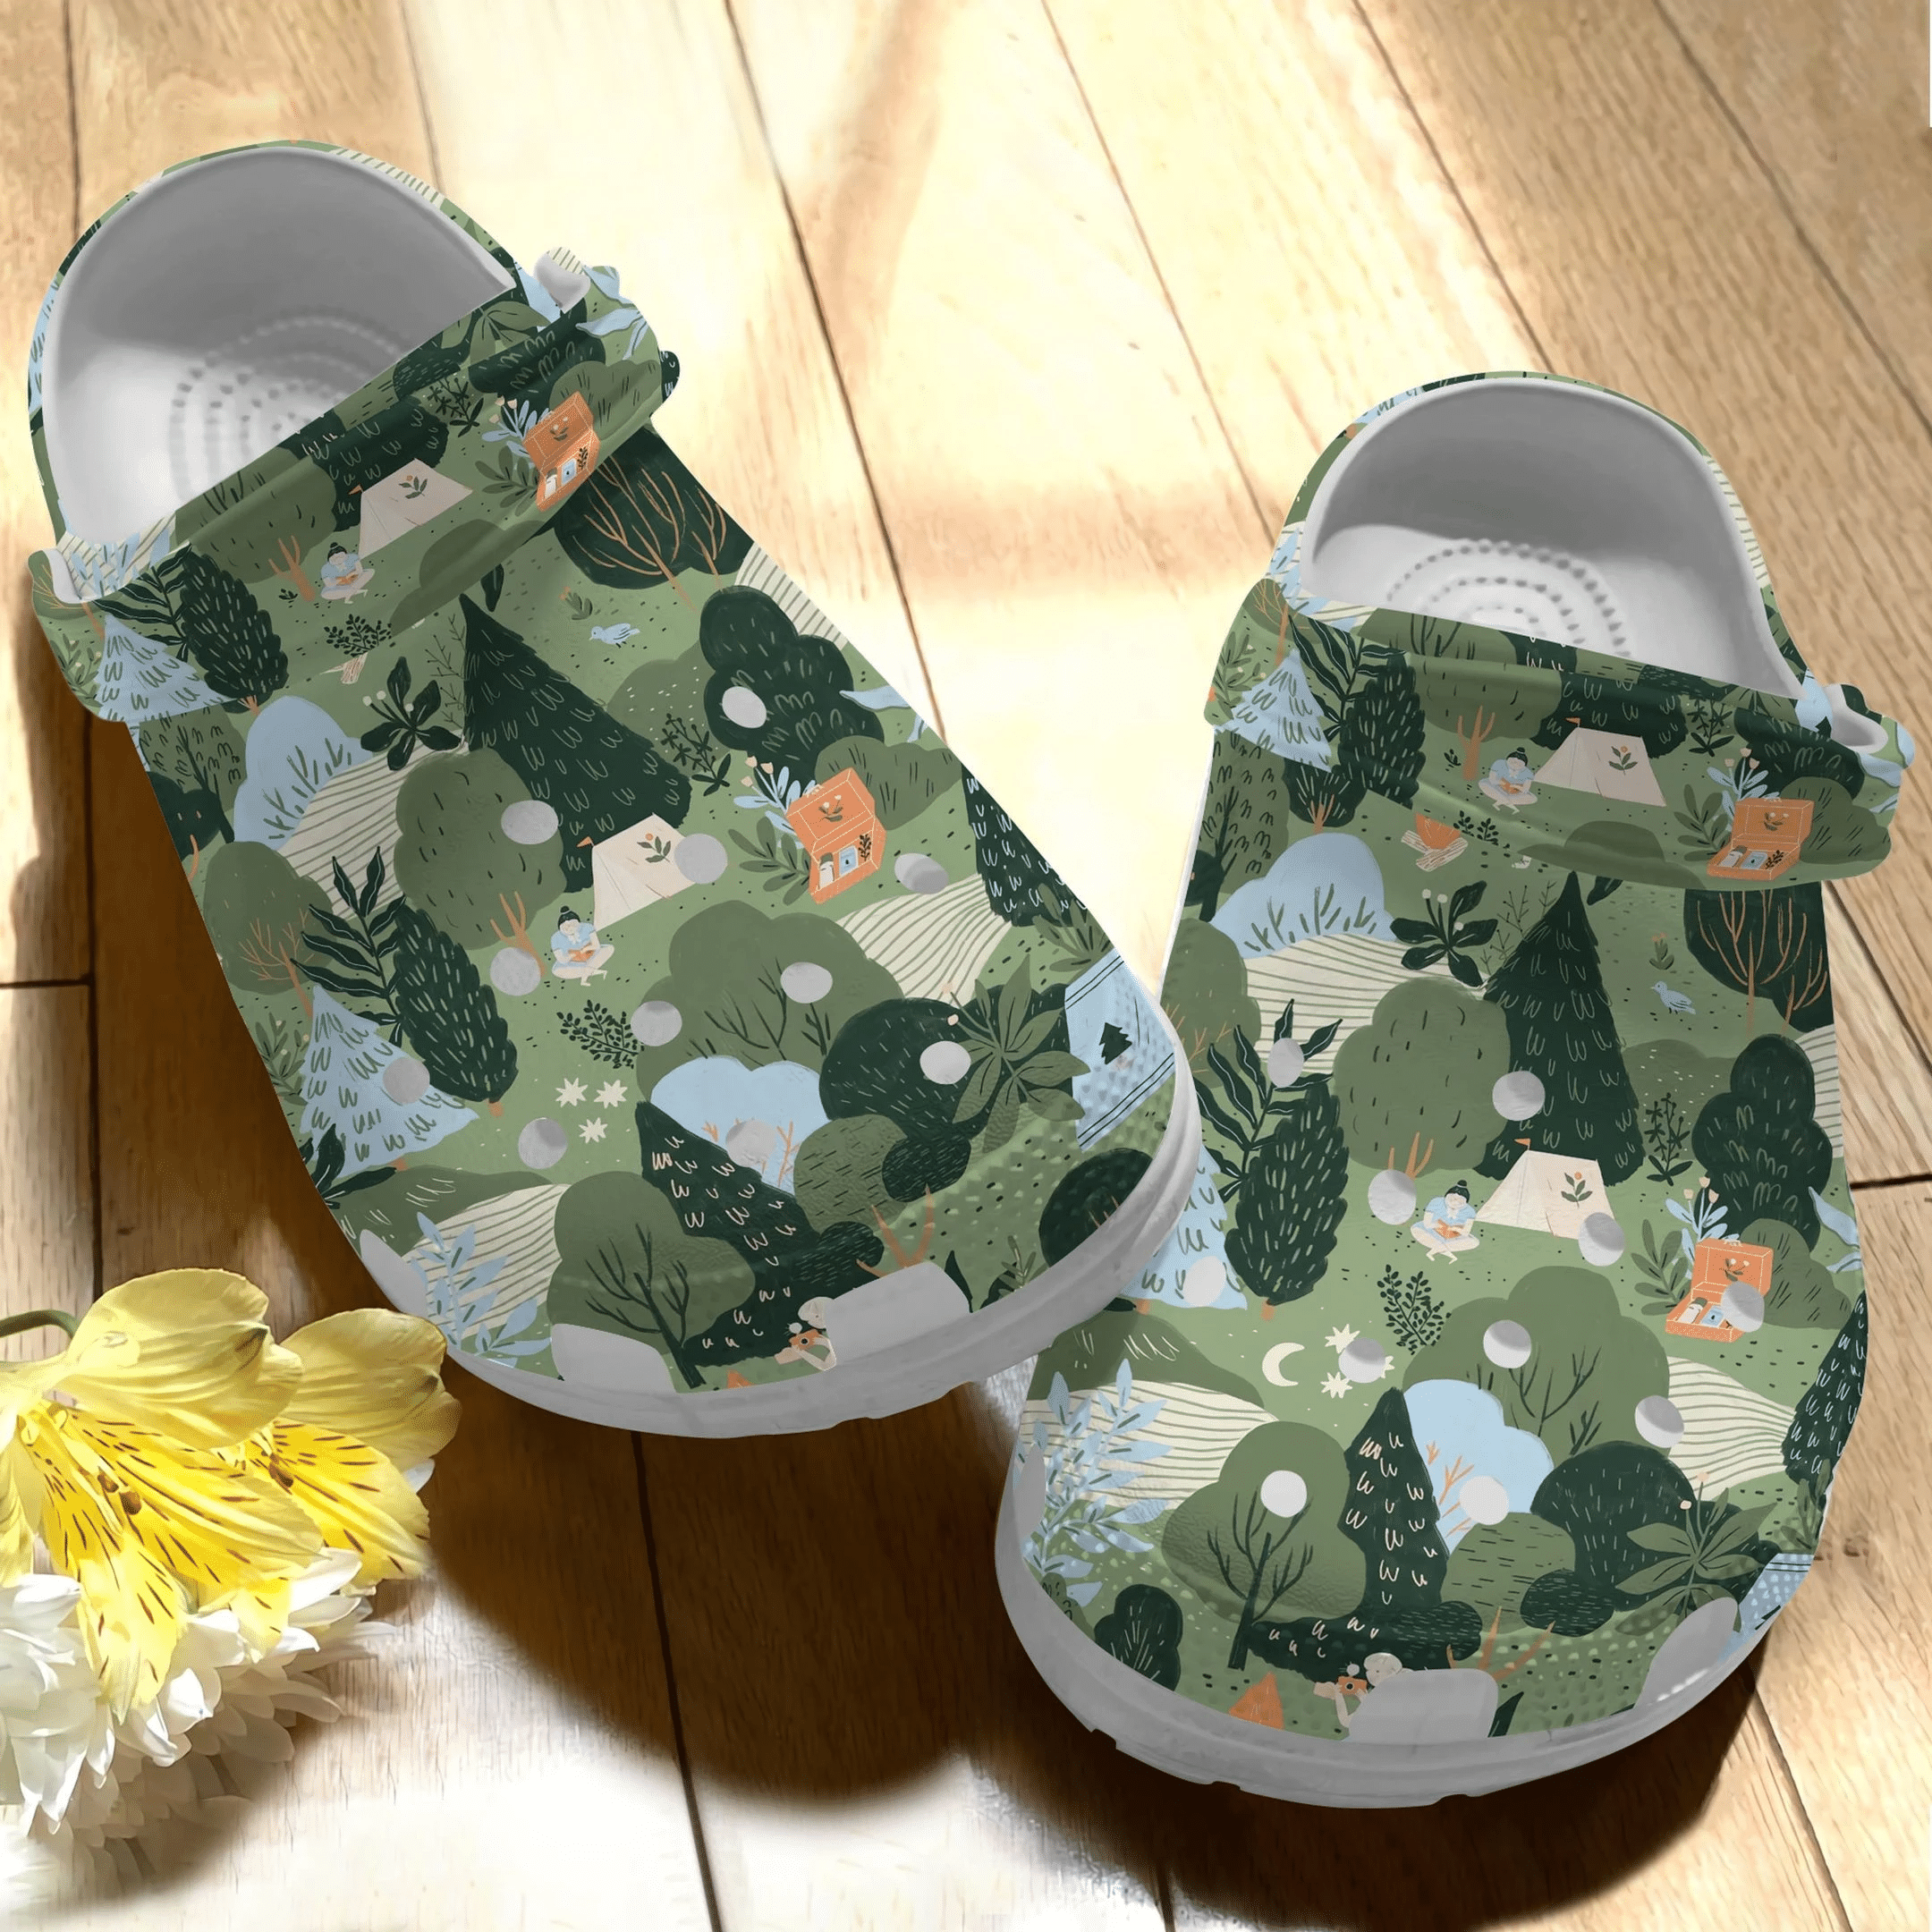 Camping Life Shoes Clog - Camping Pattern Collection Crocs Crocbland Clog Birthday Gift For Man Woman Boy Girl